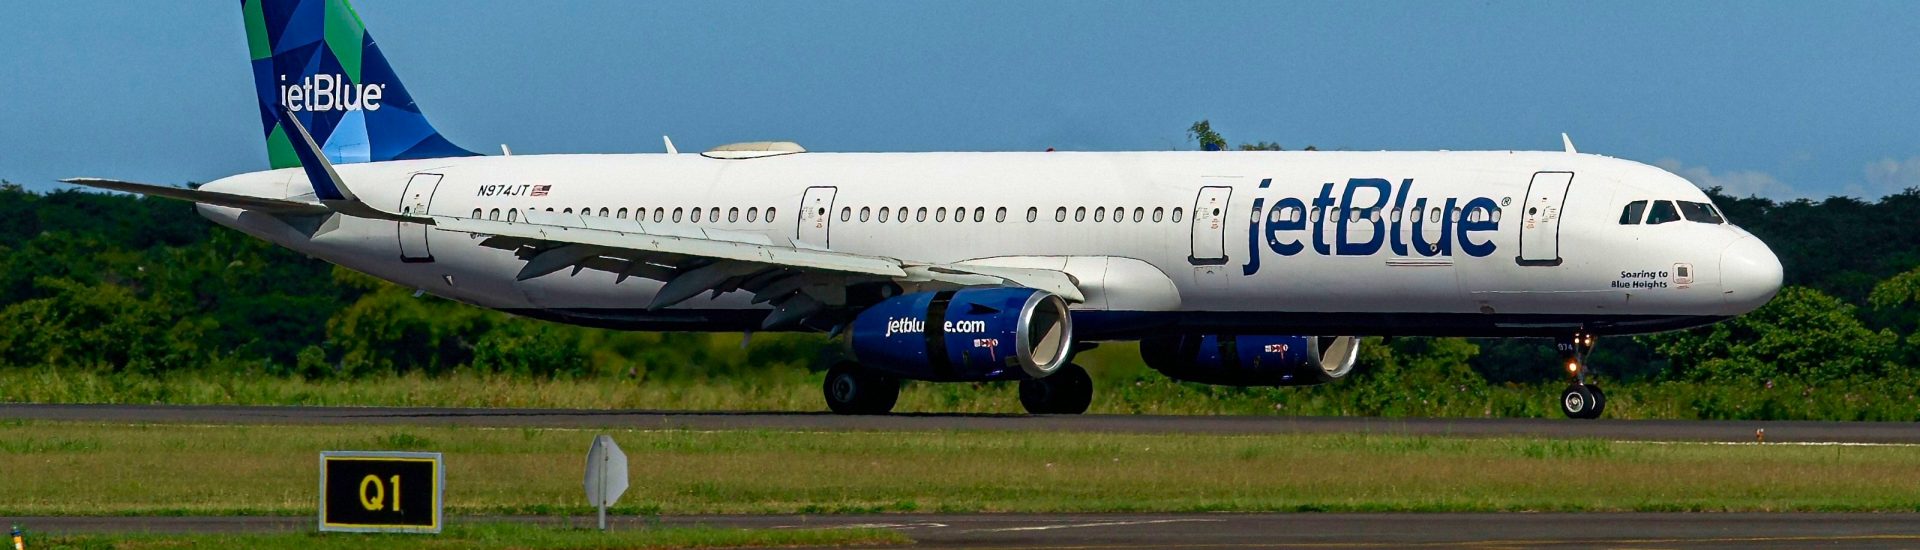 A321-200 JetBlue N974JT